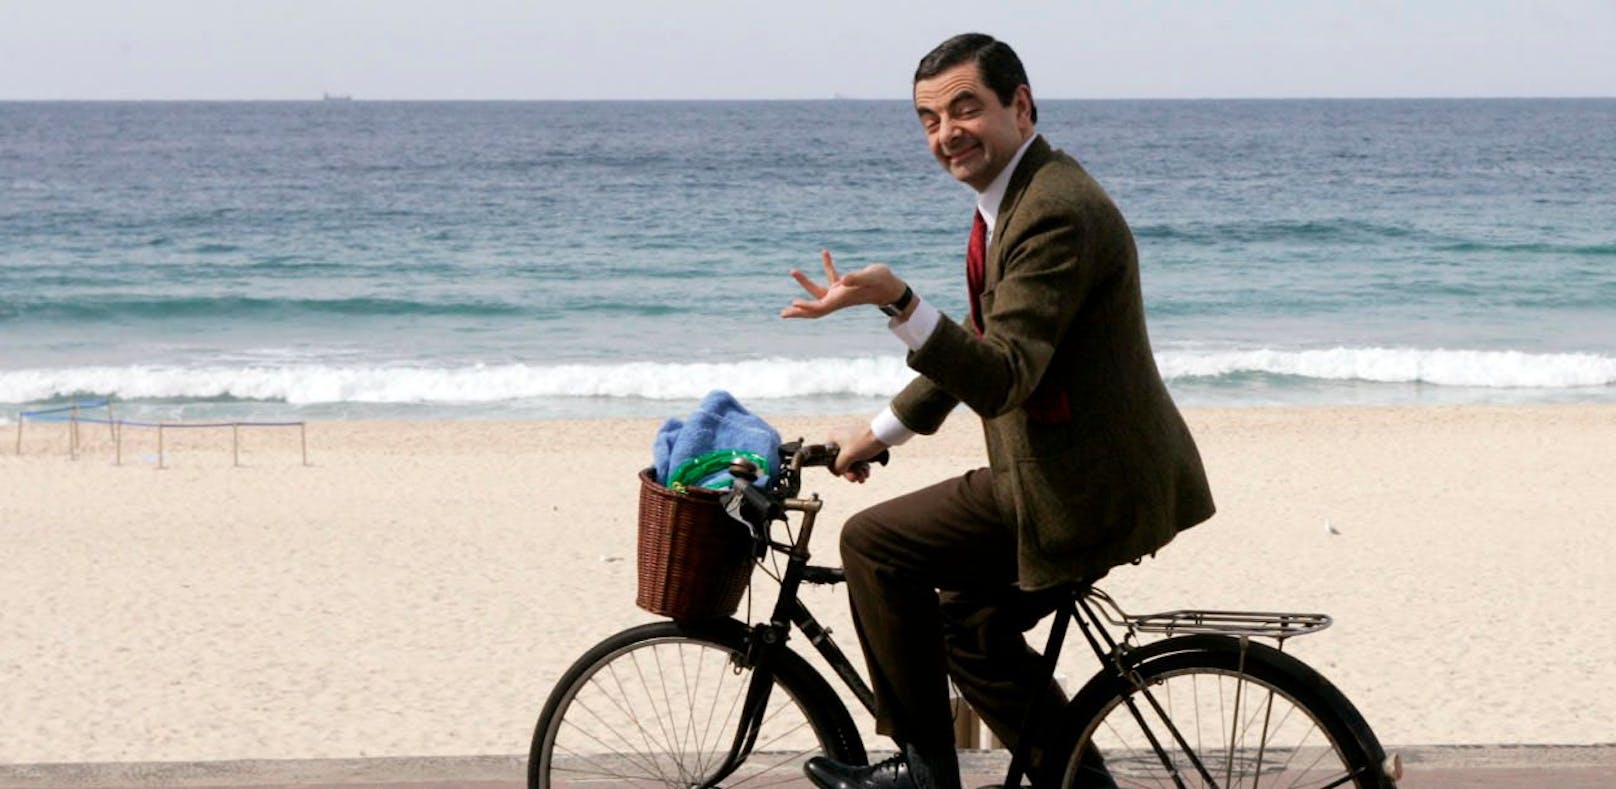 Rowan Atkinson plant neuen "Mr. Bean"-Film